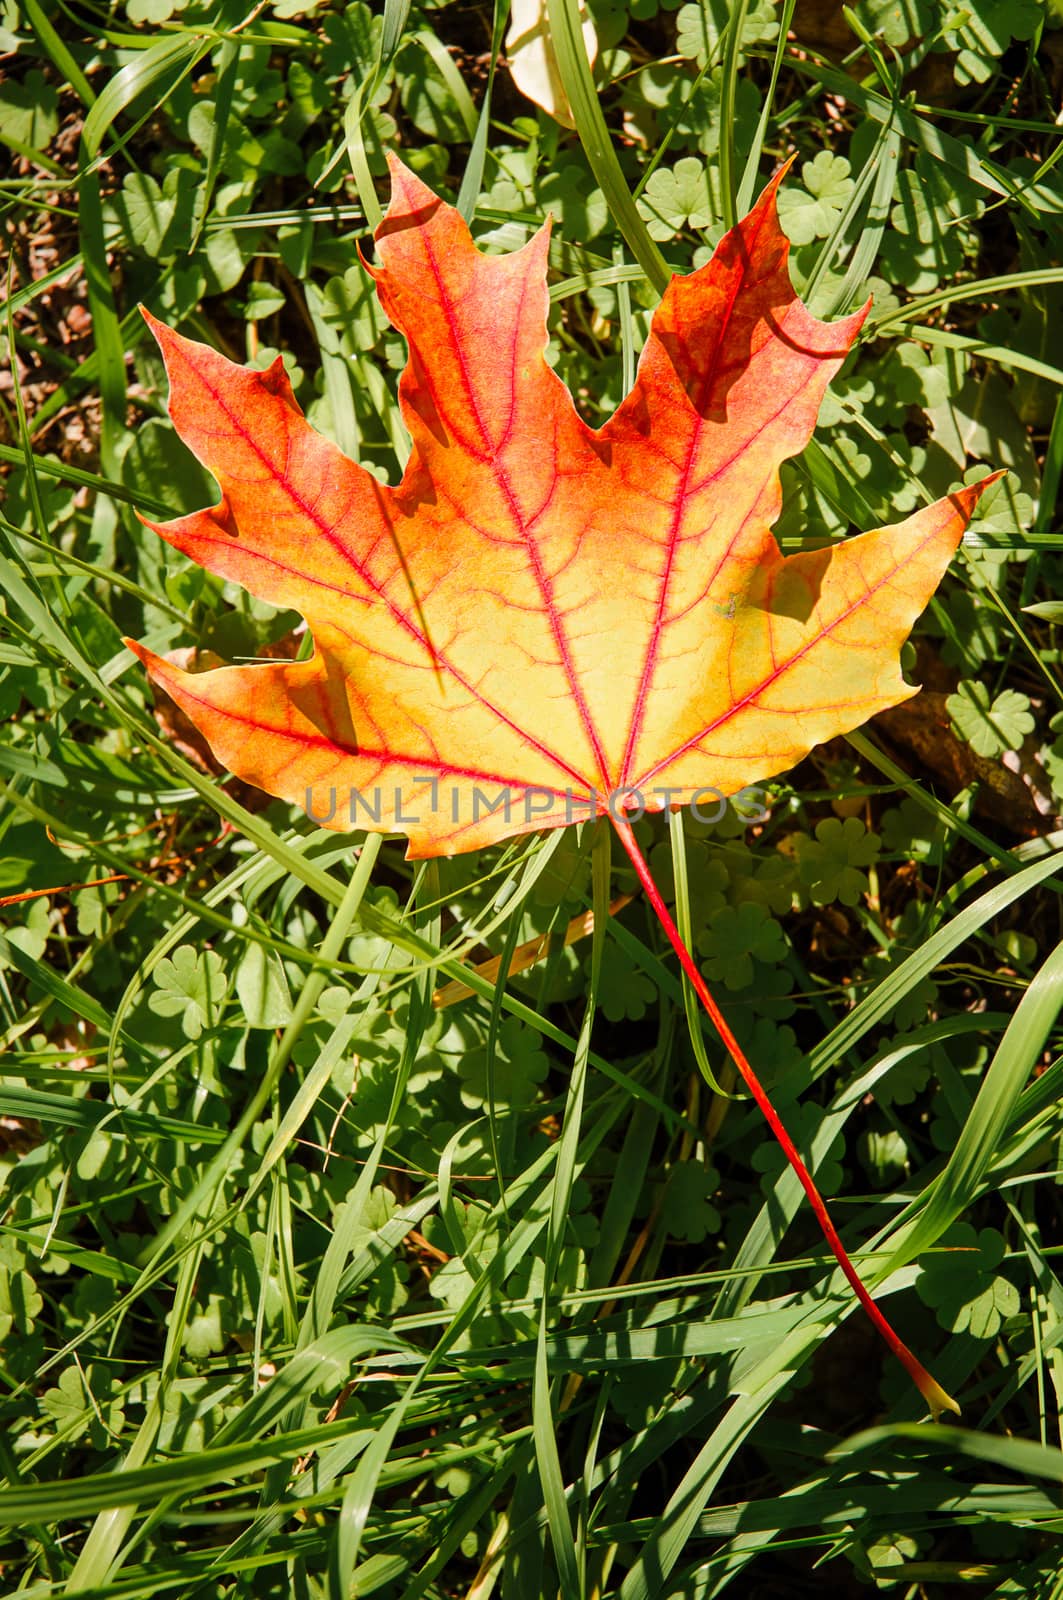 Maple Leaf in Autumn (Acer platanoides) by MaxalTamor